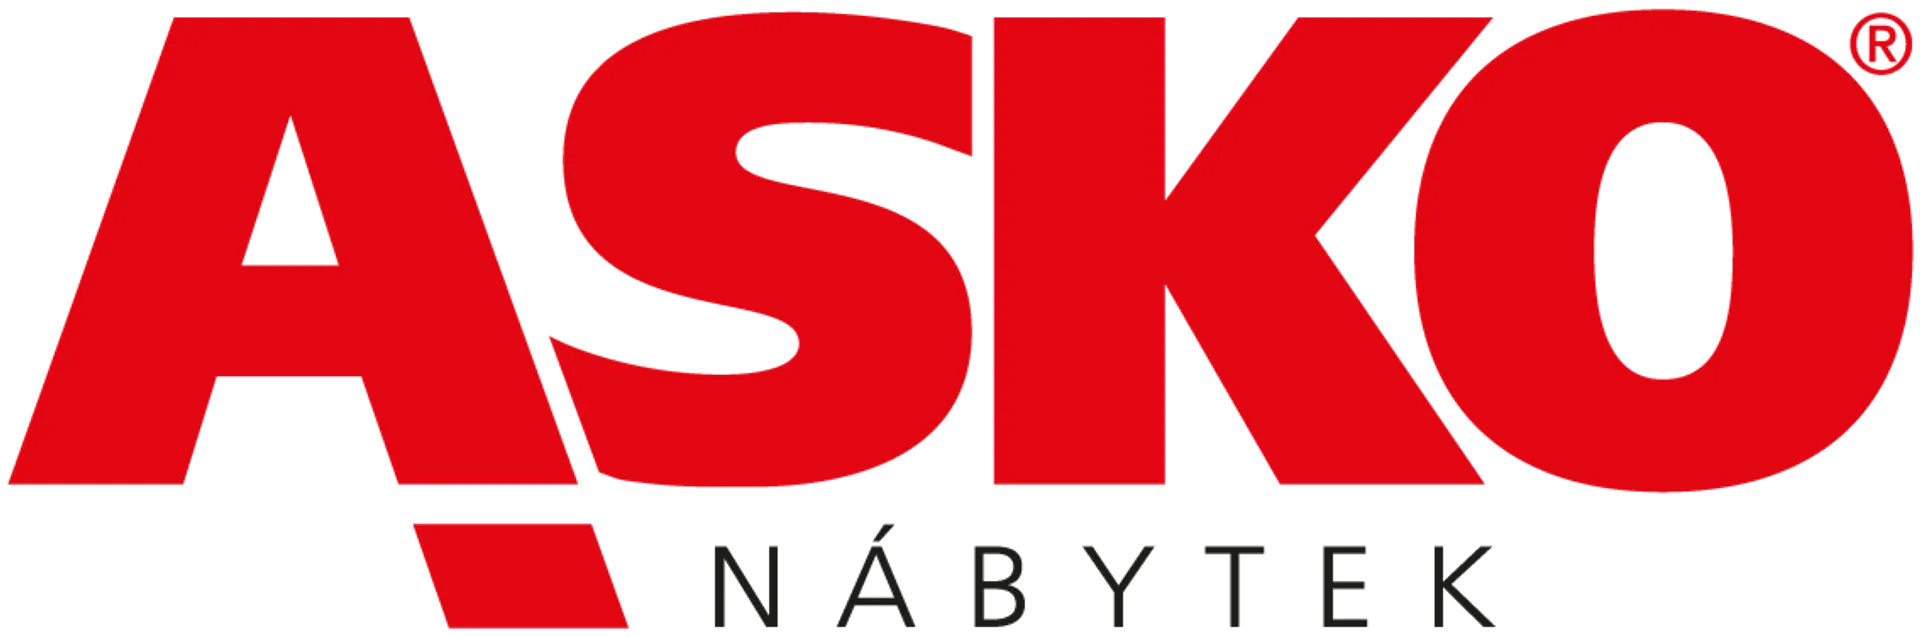 ASKO logo of current catalogue